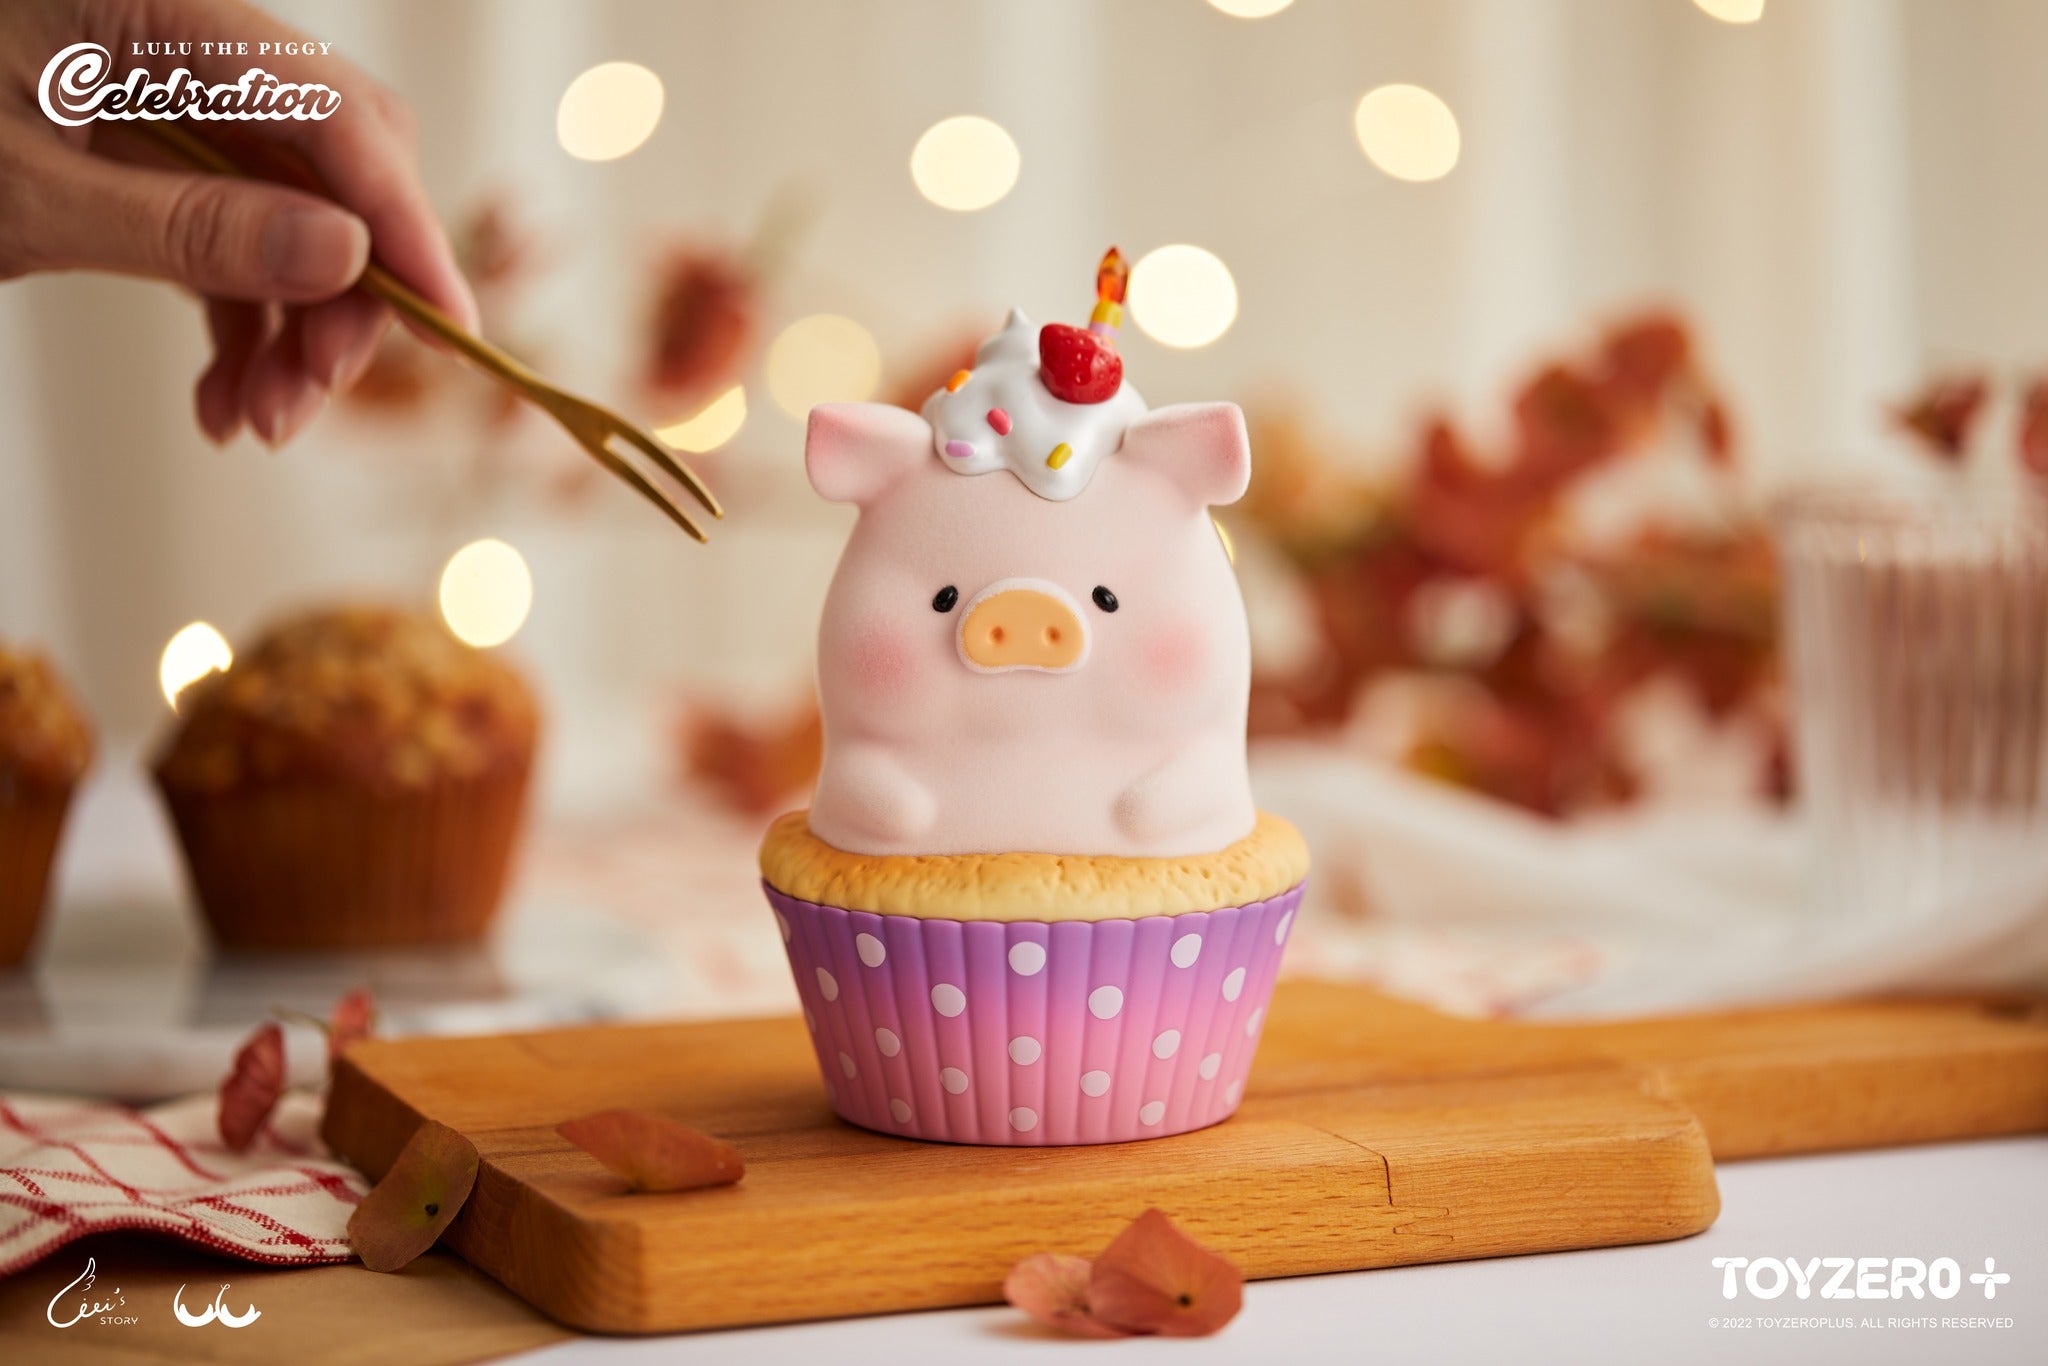 LuLu The Piggy Celebration - Cupcake XL